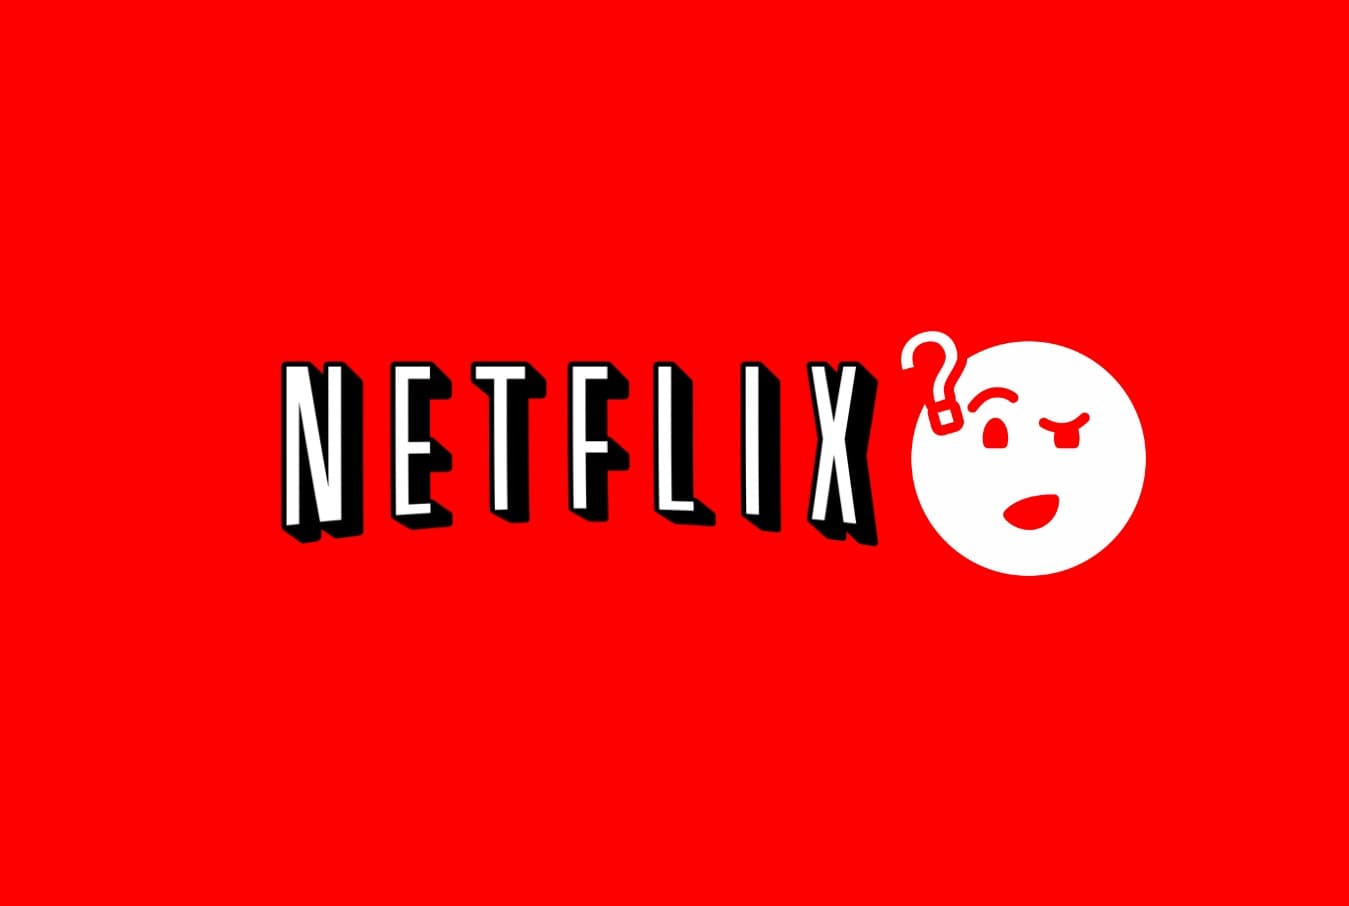 Is It Illegal To Watch Netflix Using a VPN?